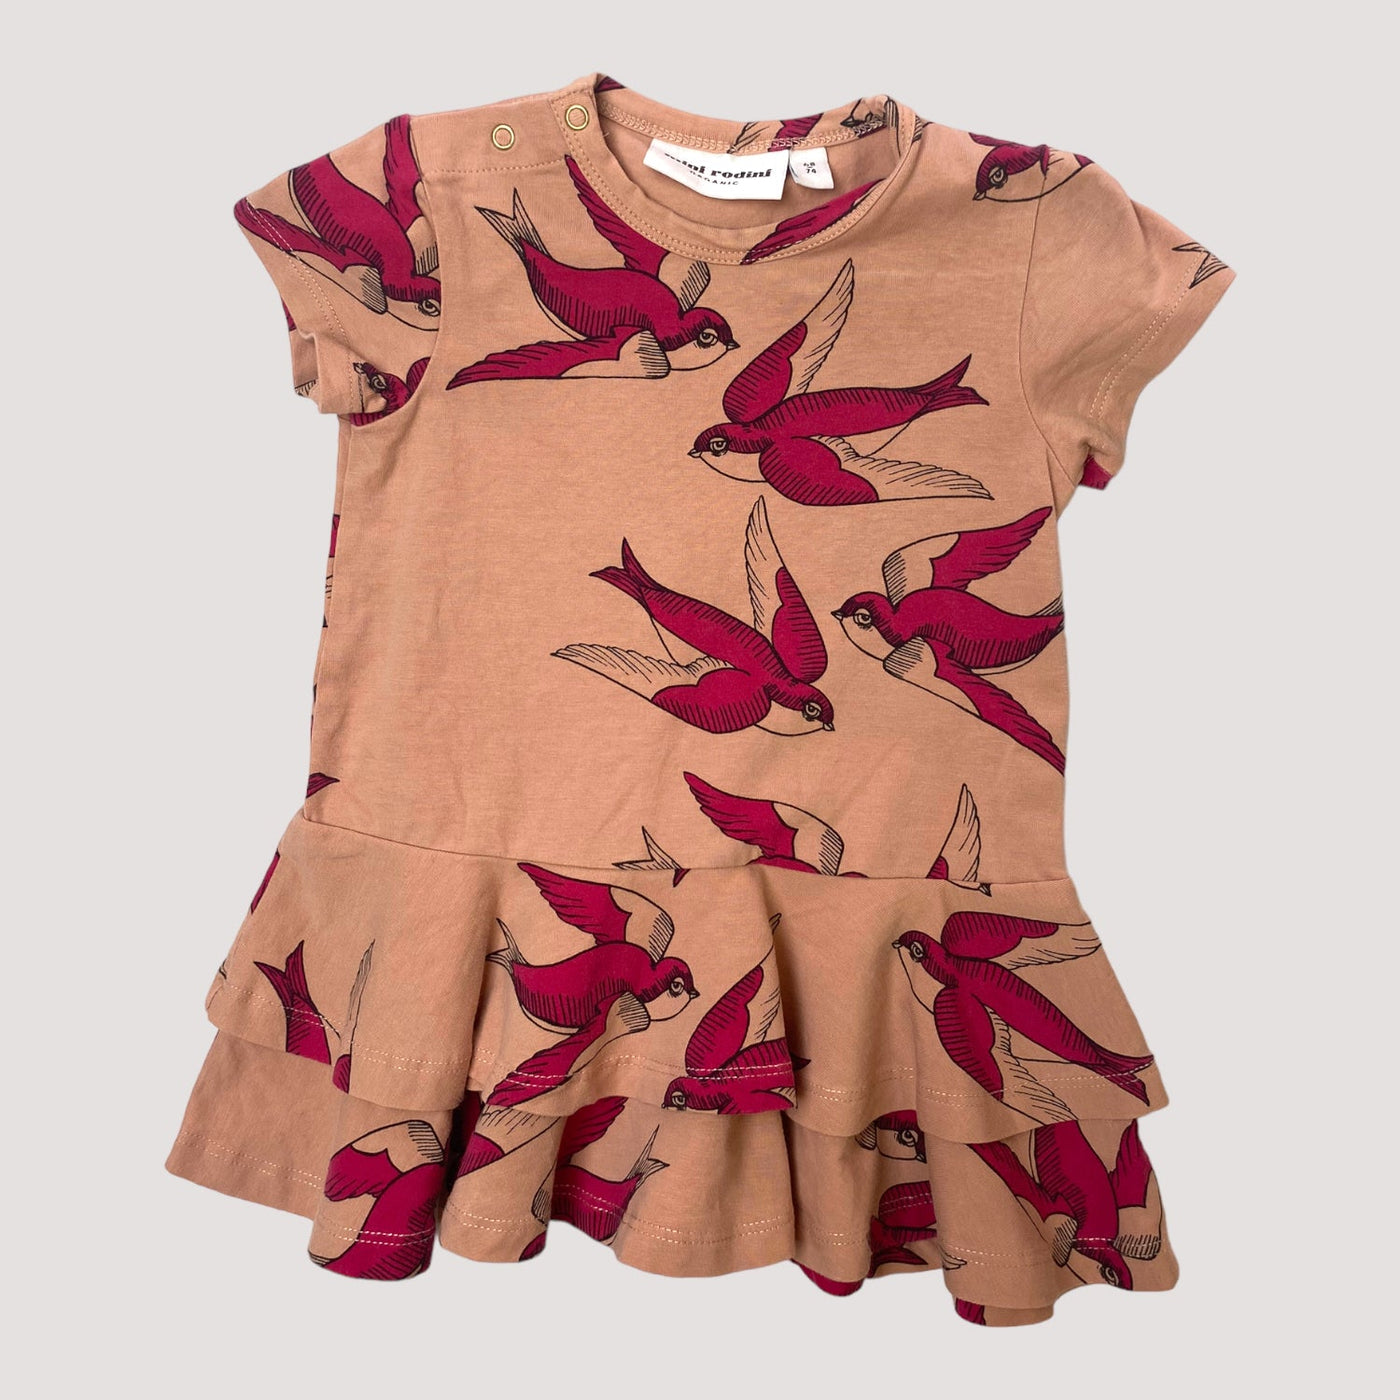 Mini Rodini dress, birds | 68/74cm